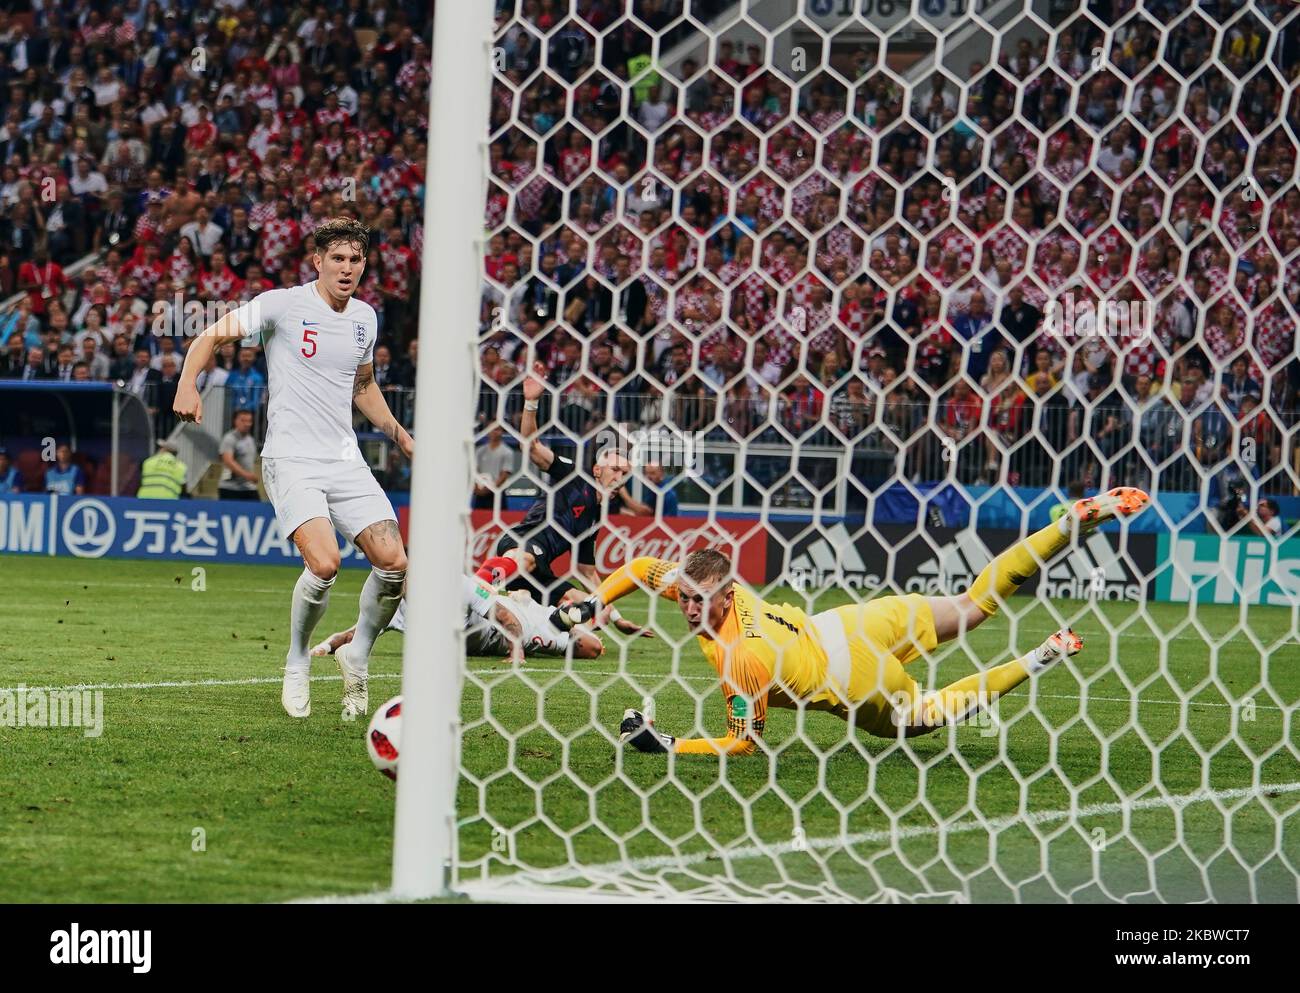 Ivan Perisic of Croatia shooting on goal during the FIFA World Cup match England versus Croatia at Luzhniki Stadium, Moscow, Russia on July 11, 2018. (Photo by Ulrik Pedersen/NurPhoto) Stock Photo